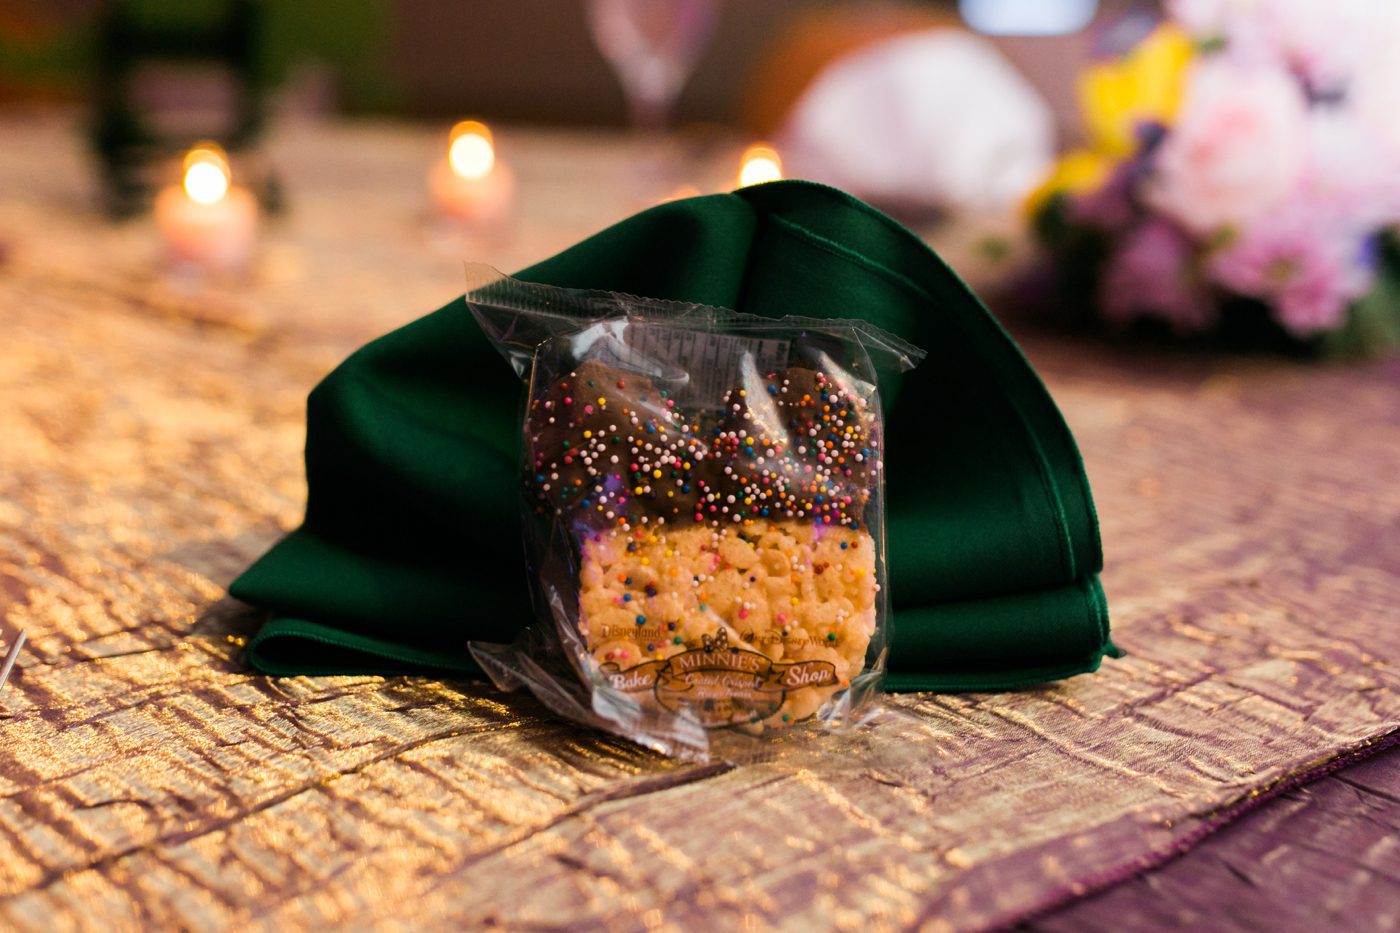 Mickey Mouse rice crispy treat for Disney wedding